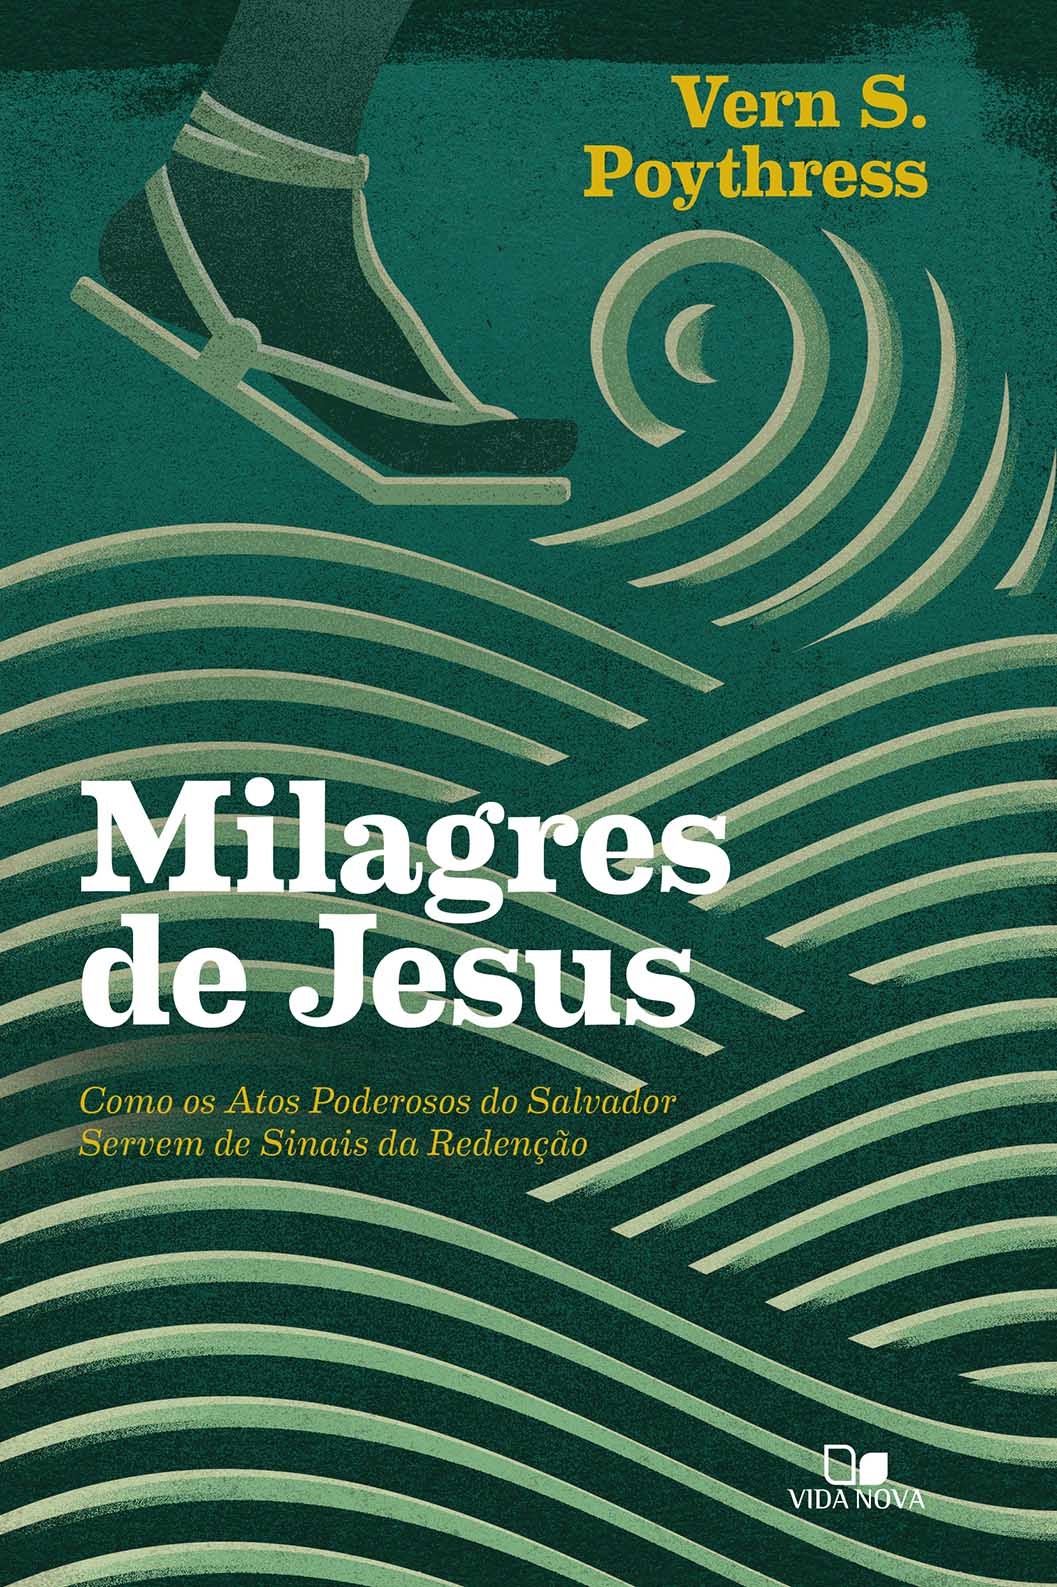 Milagres de Jesus - Poythress | Vern S. Poythress